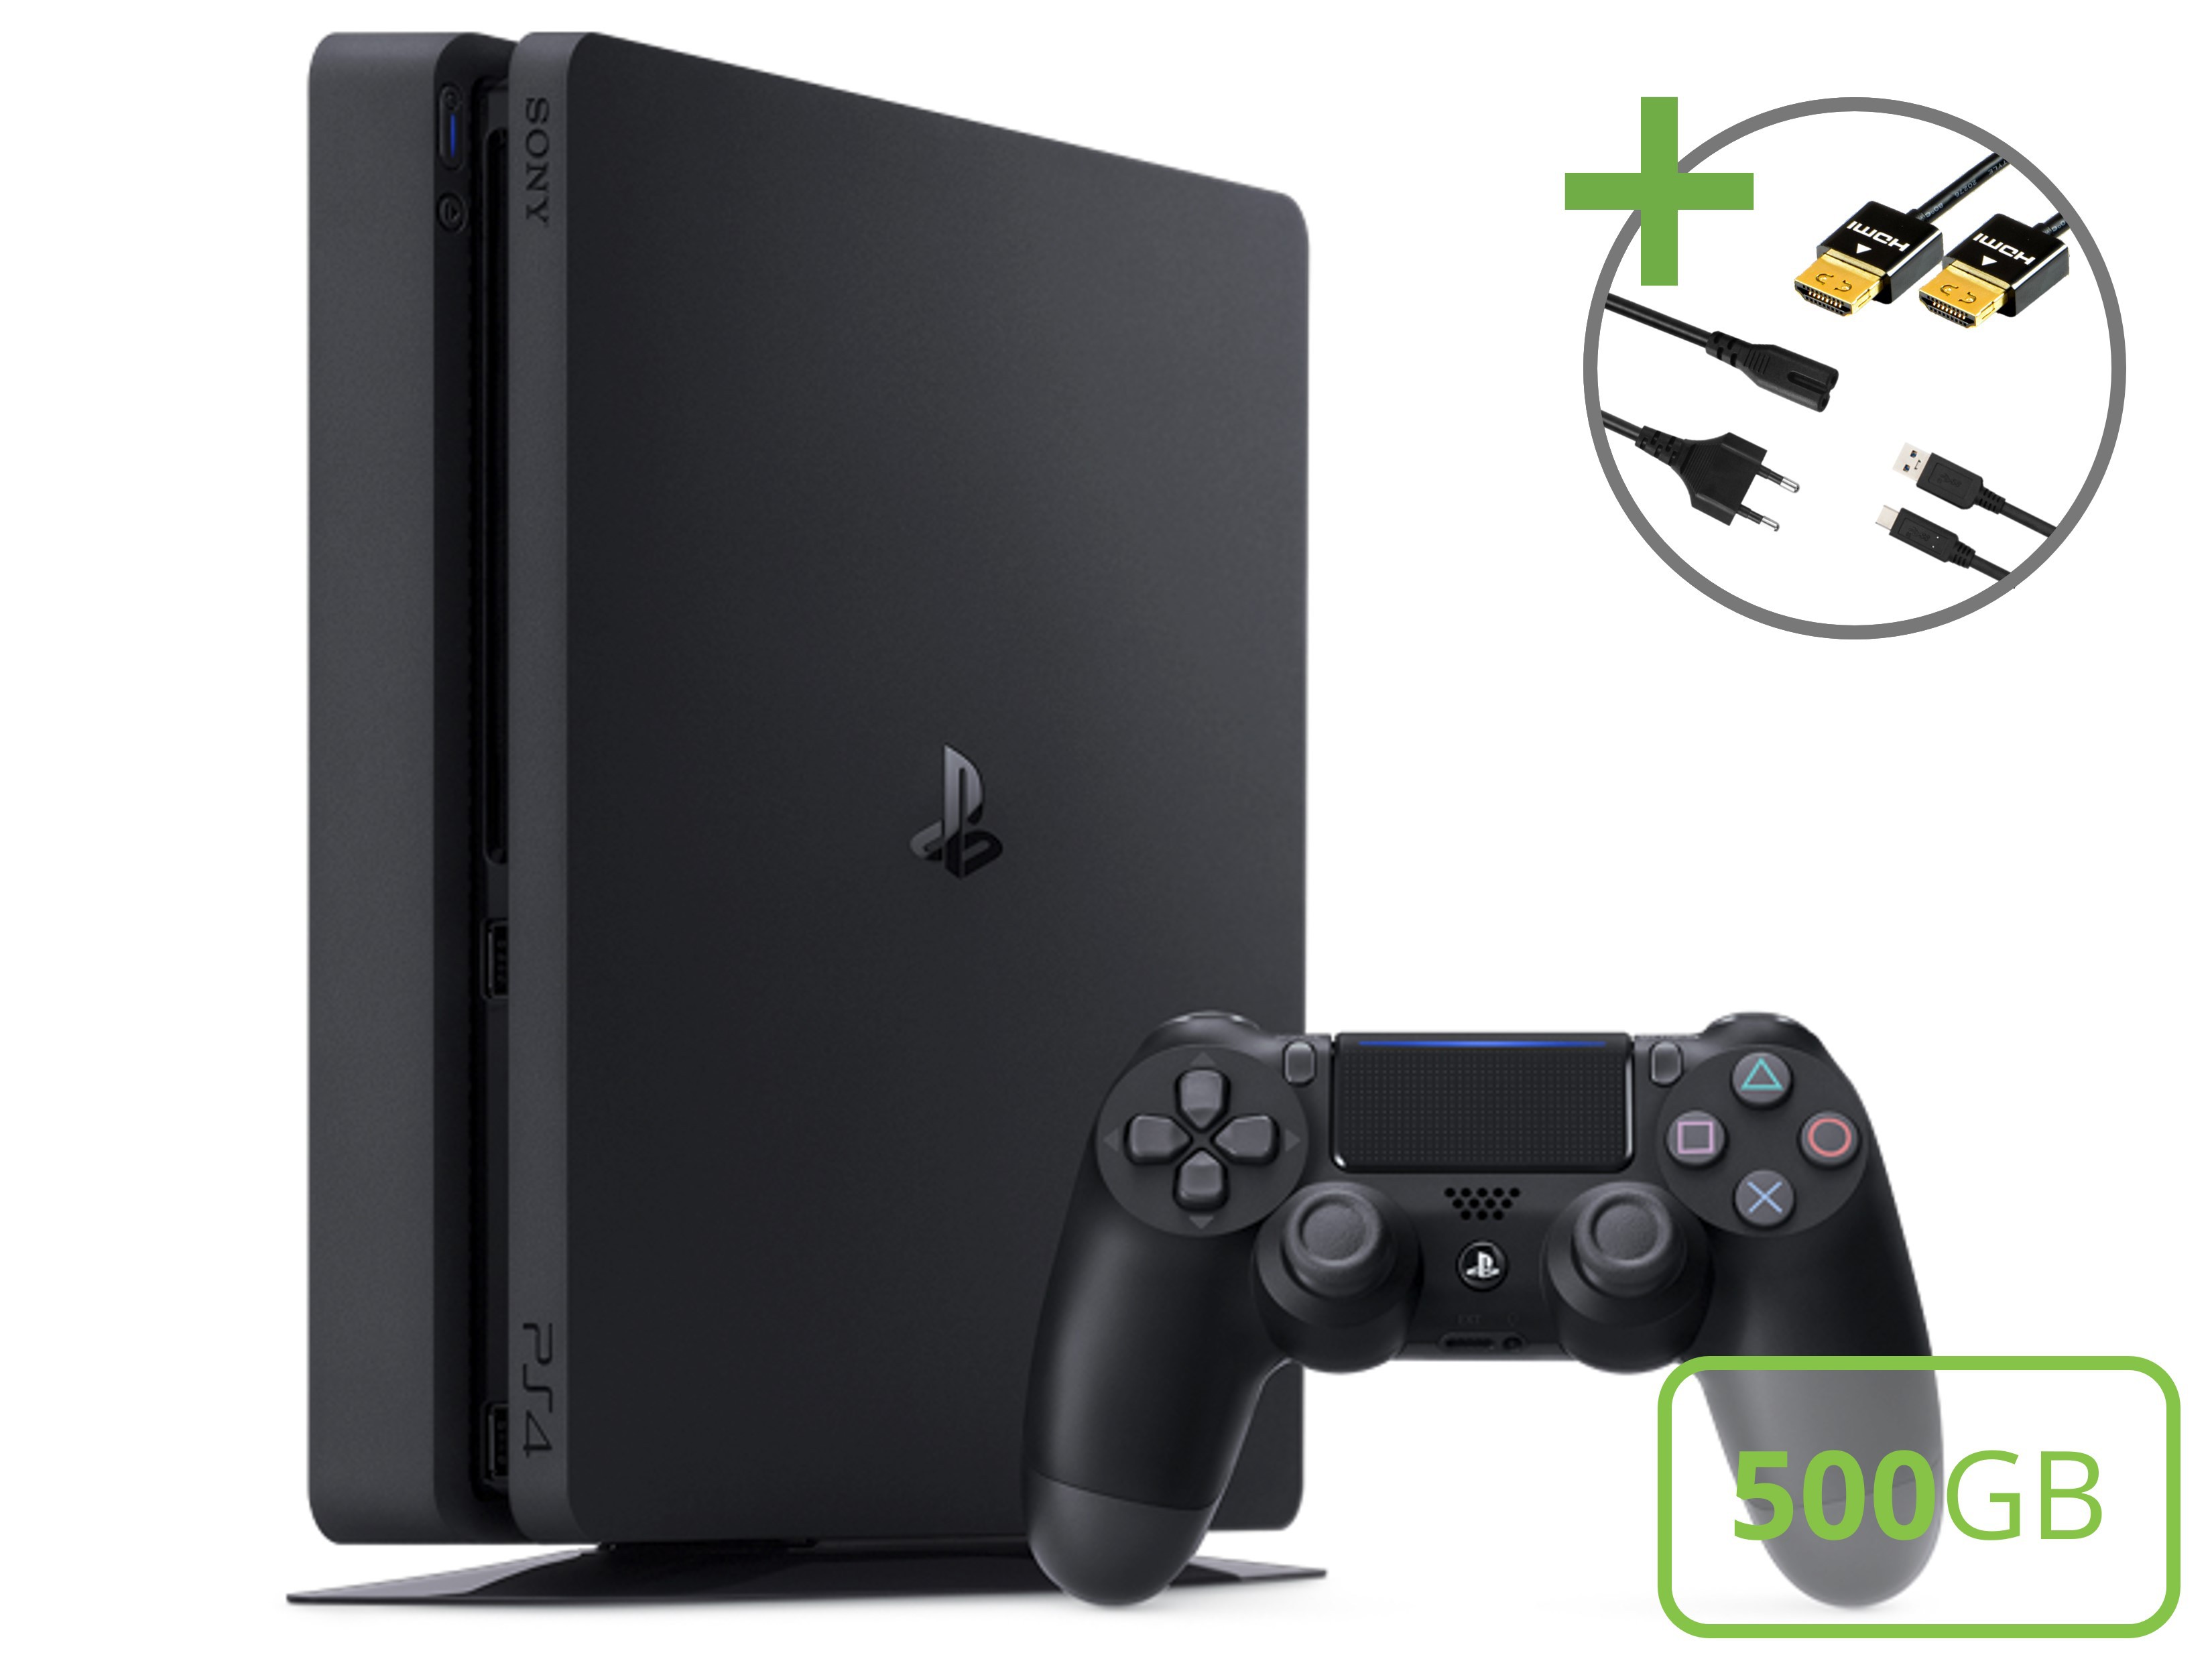 Sony PlayStation 4 Slim Starter Pack - 500GB Ratchet & Clank Edition - Playstation 4 Hardware - 2